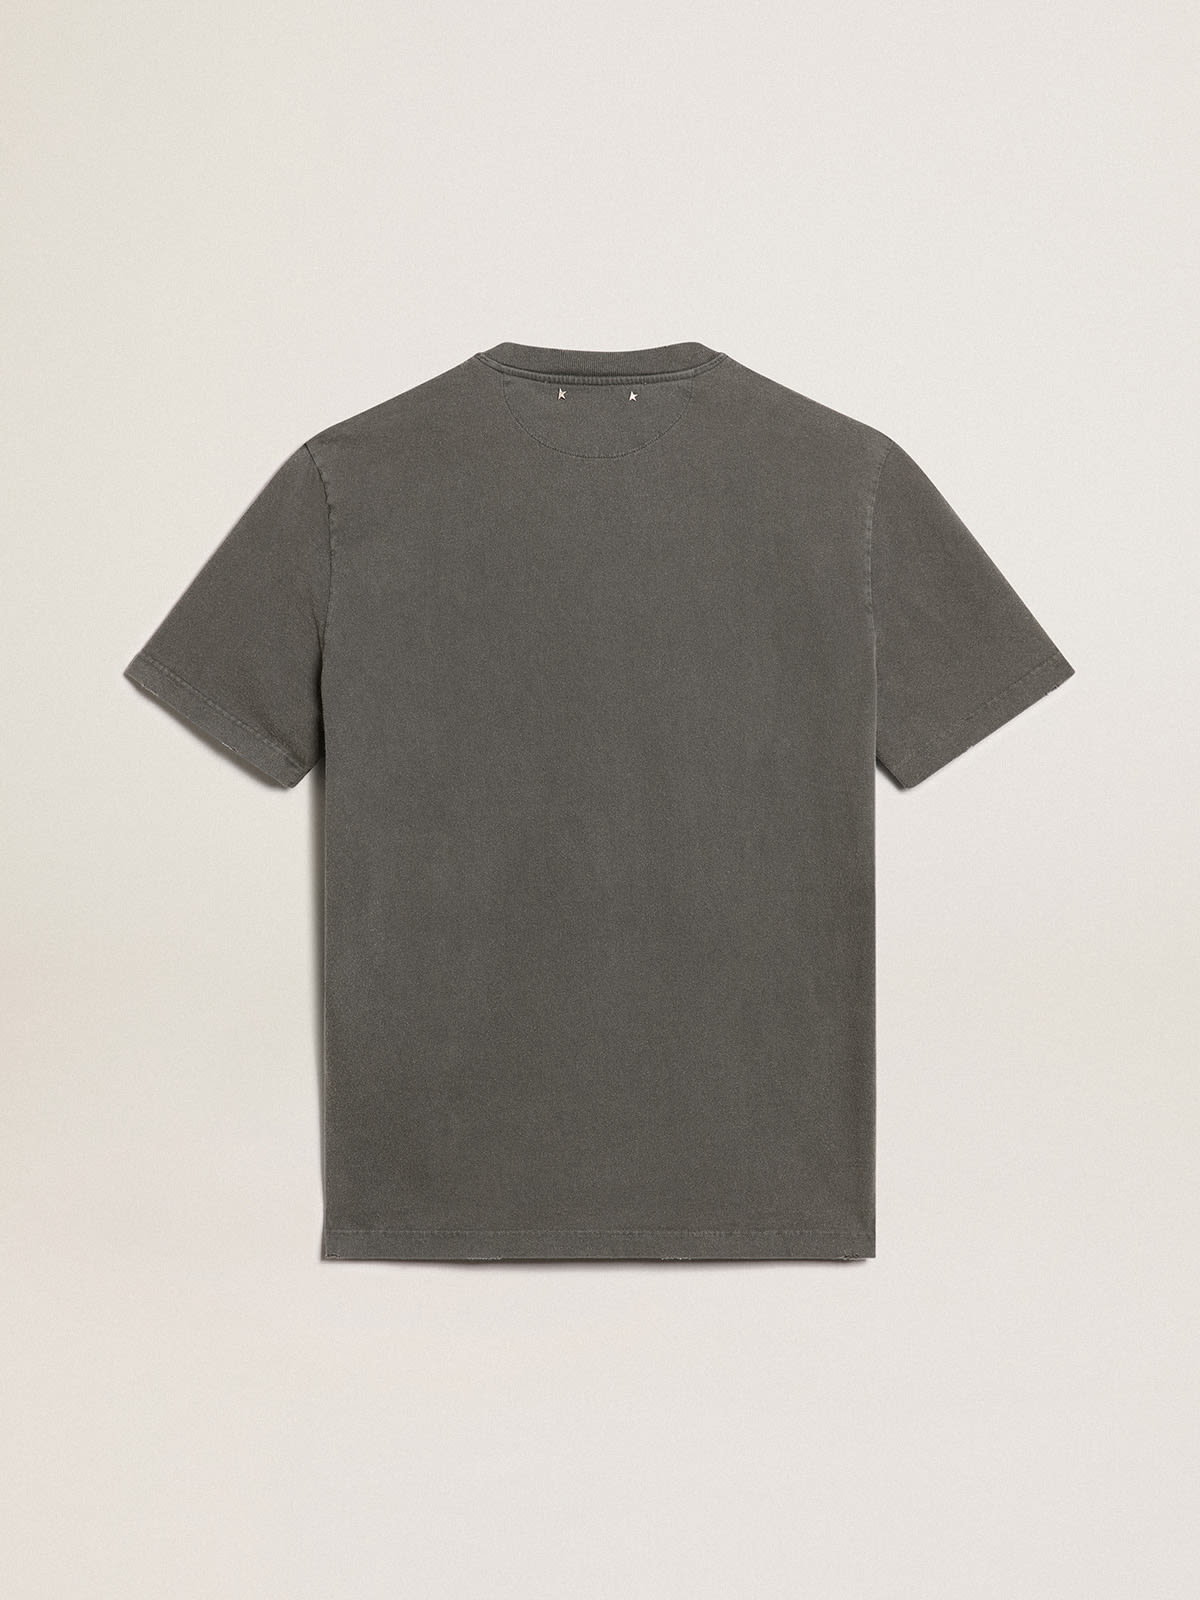 Golden Goose - Camiseta masculina cinza antracite com tratamento desgastado in 